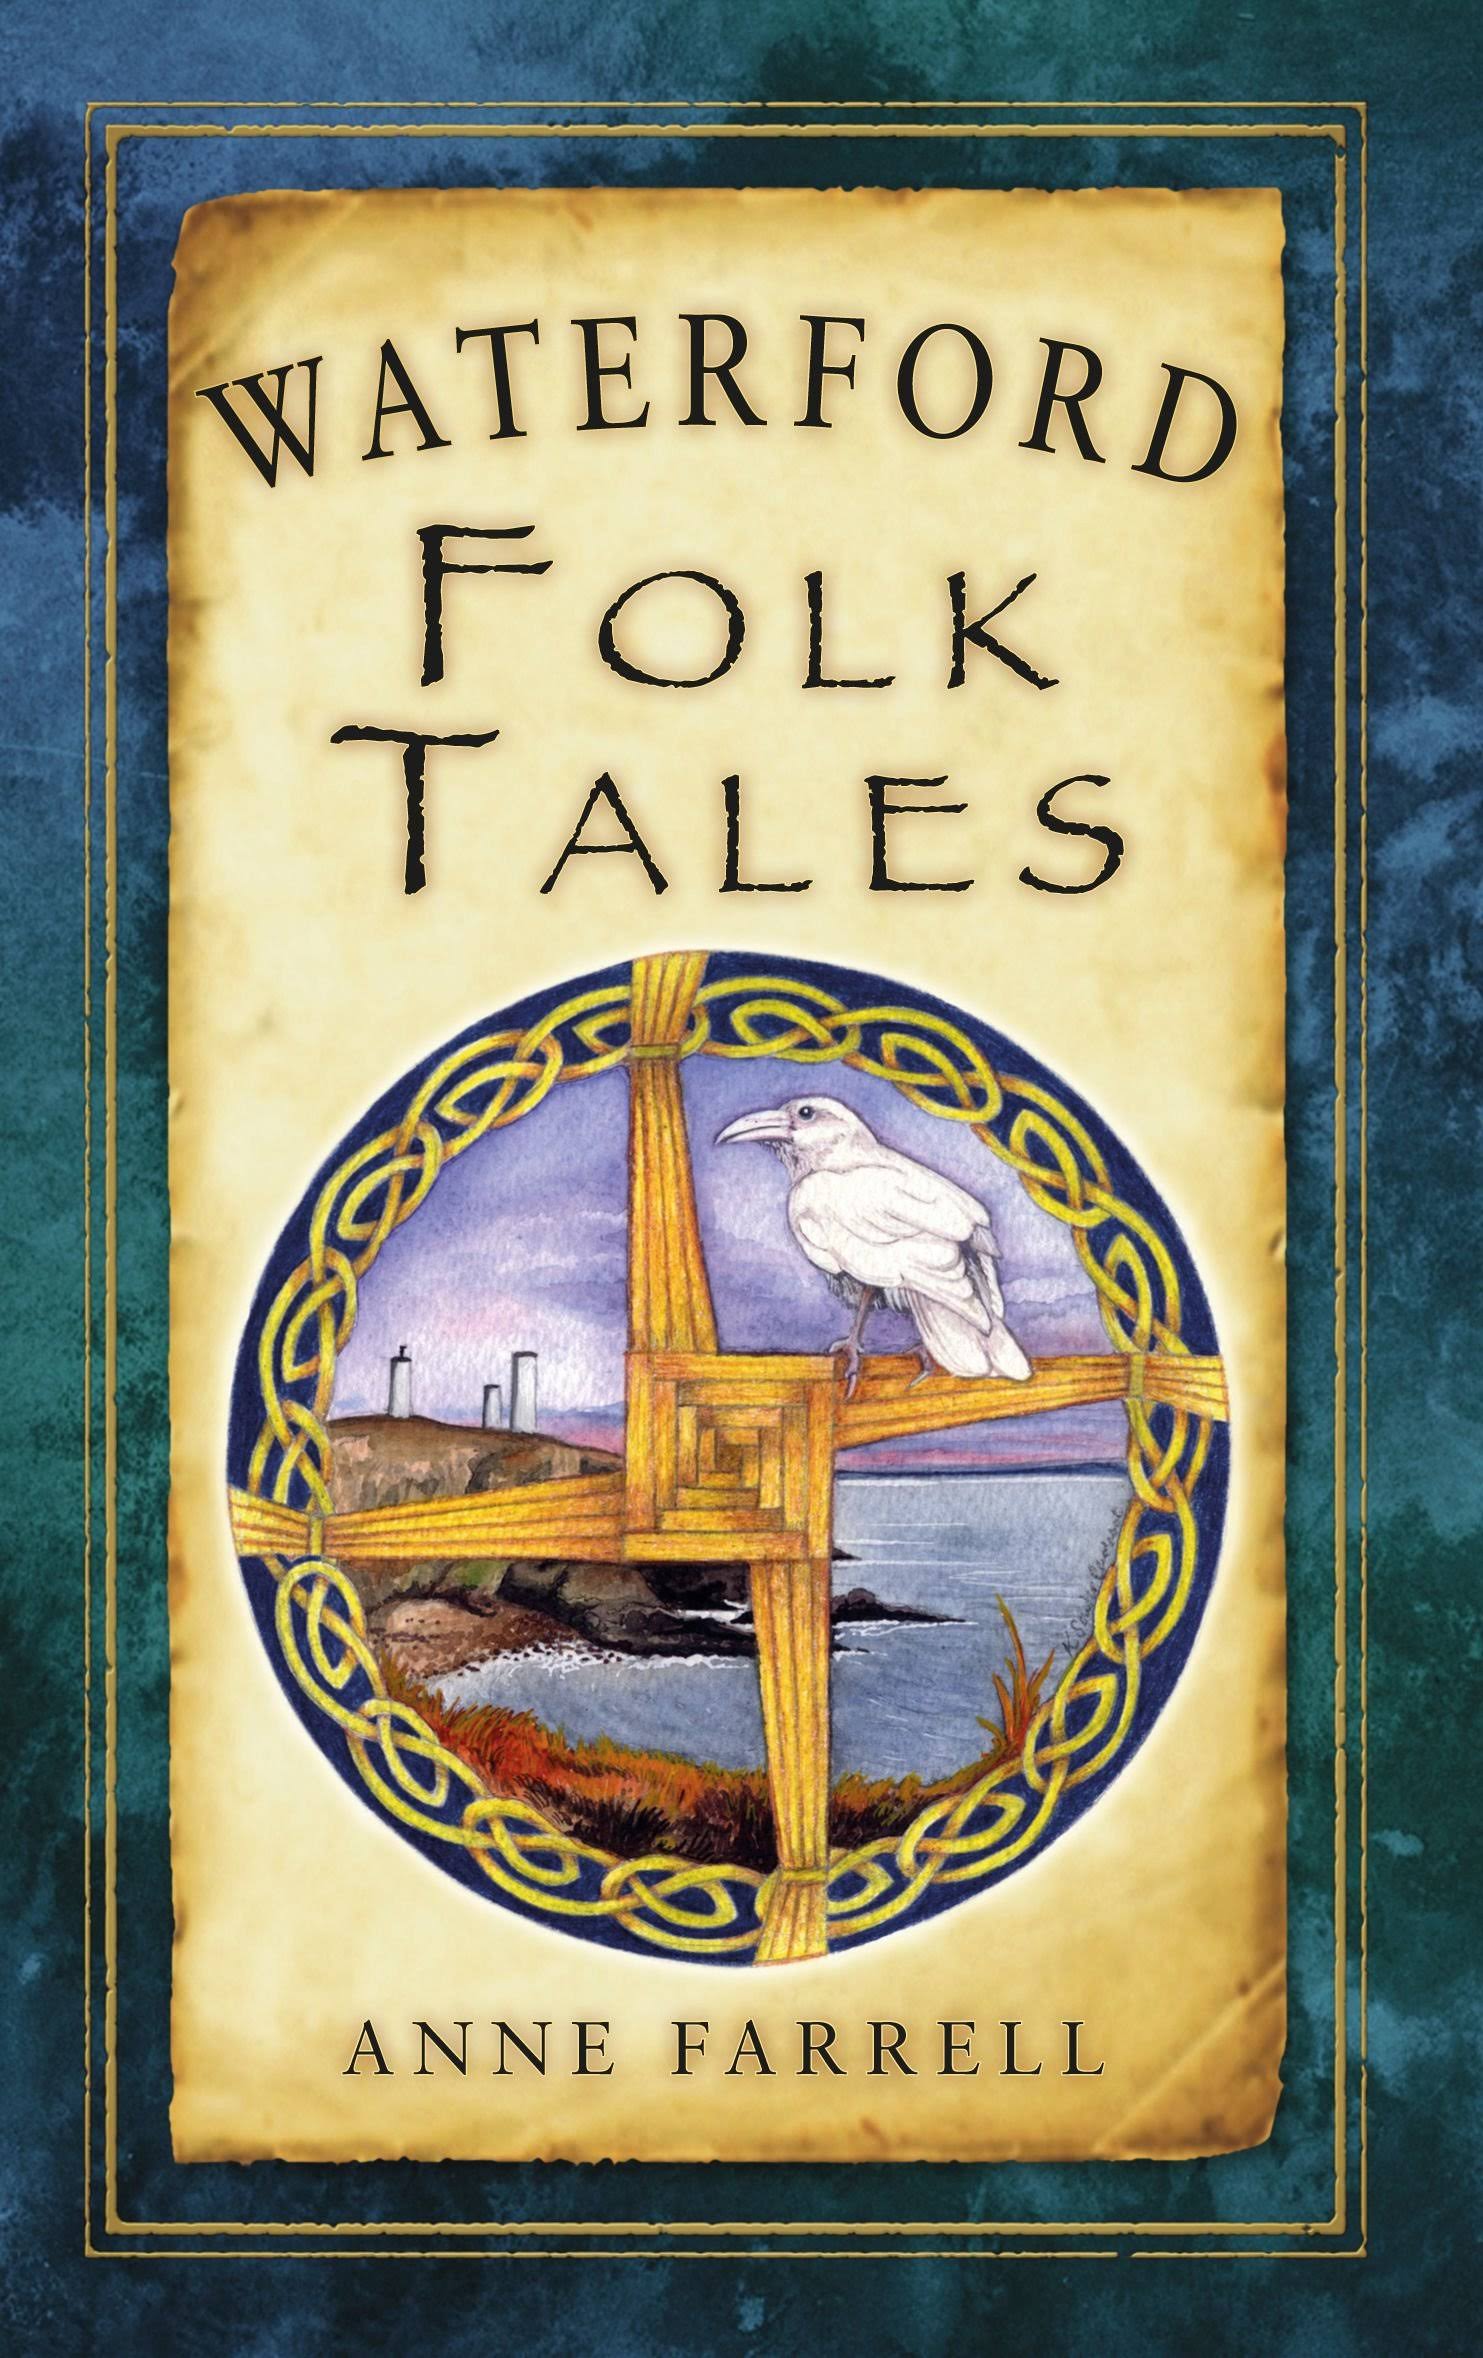 Waterford Folk Tales by Anne Farrell